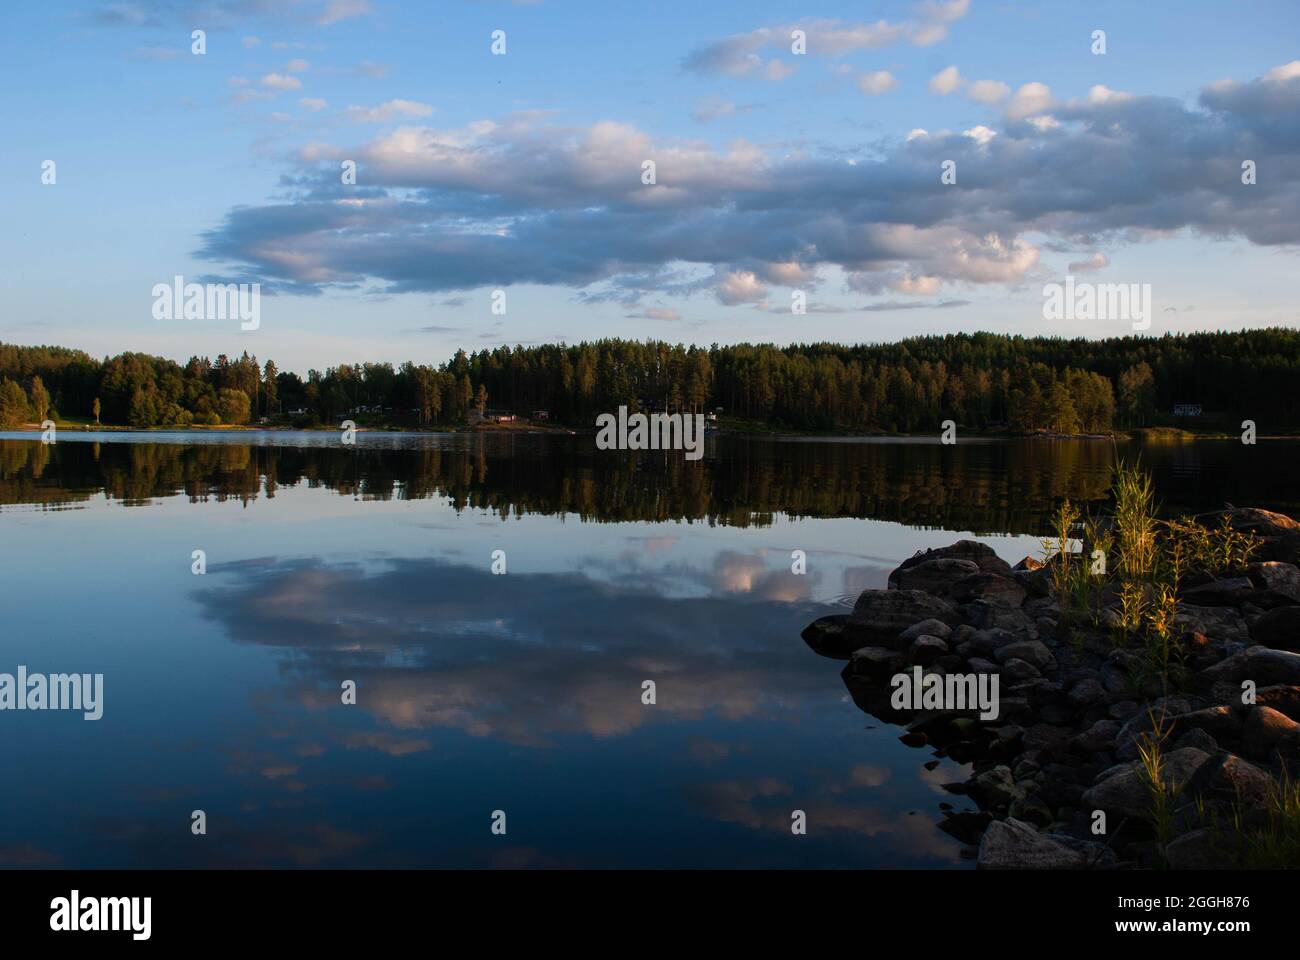 Photo of the lake Glasfjord, taken in Värmland (Sweden) during summertime. Stock Photo